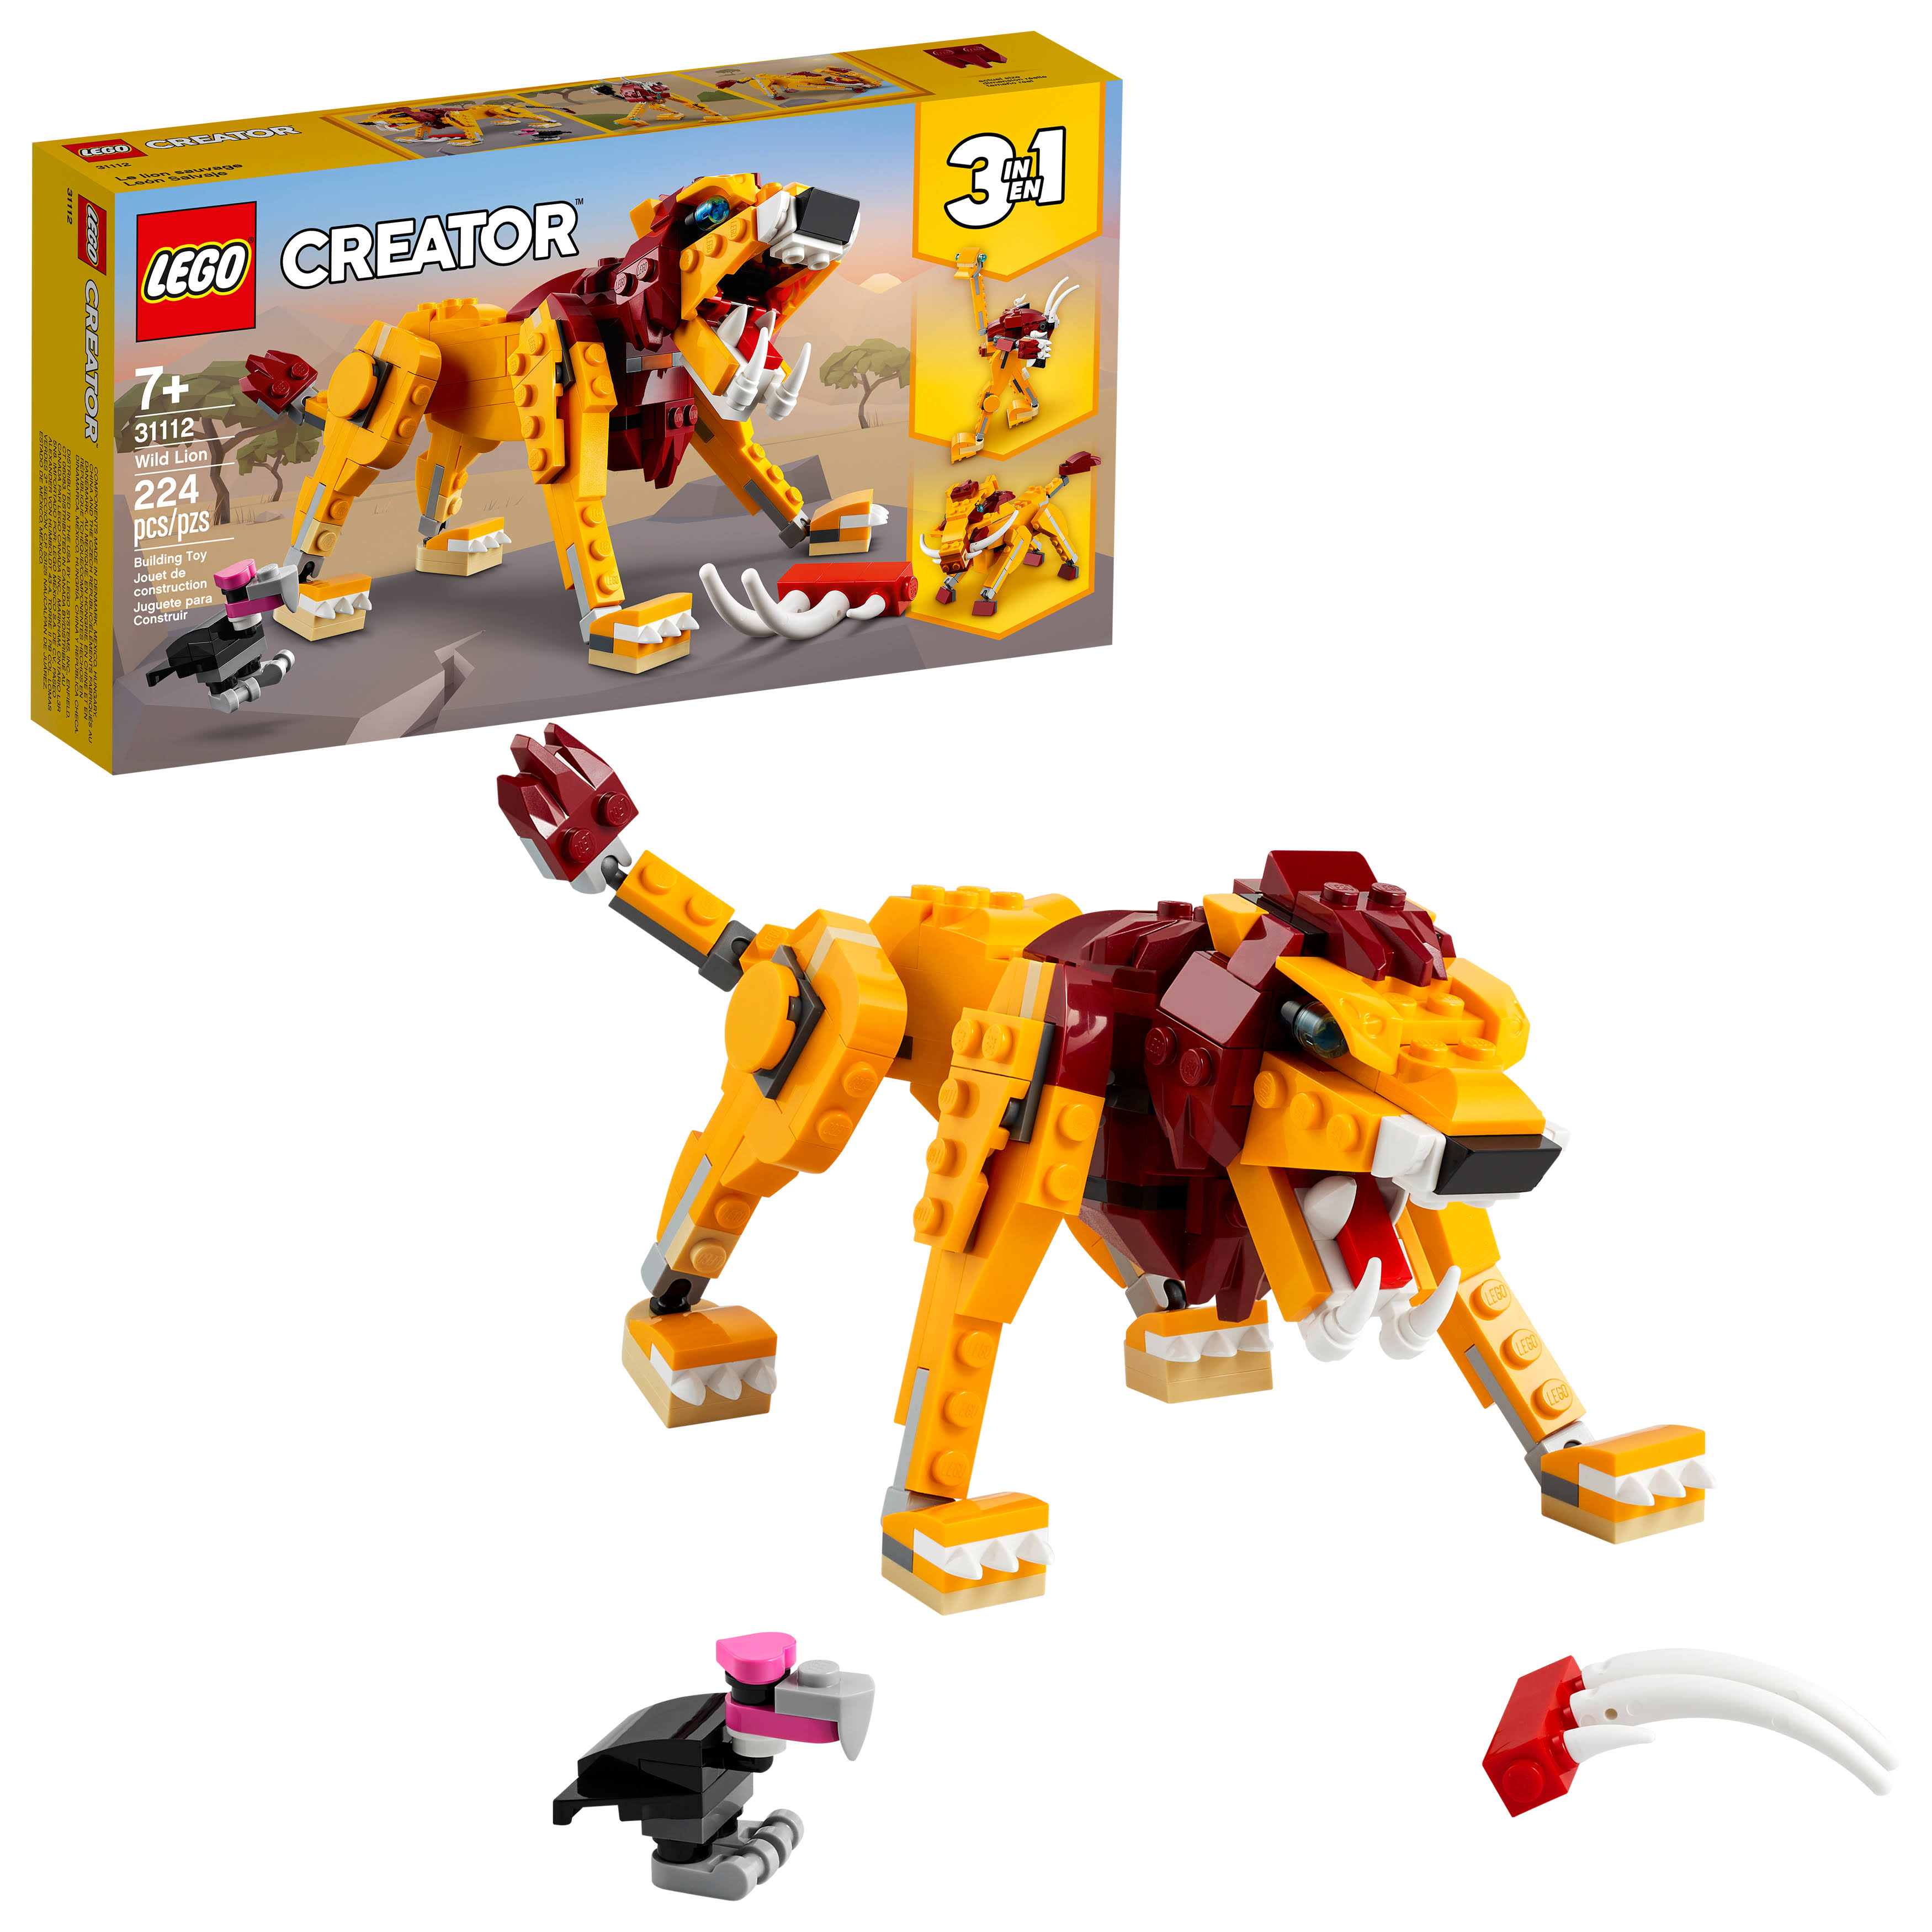 LEGO Creator 3in1 Wild Lion 31112 Building Kit (224 Pieces) UK